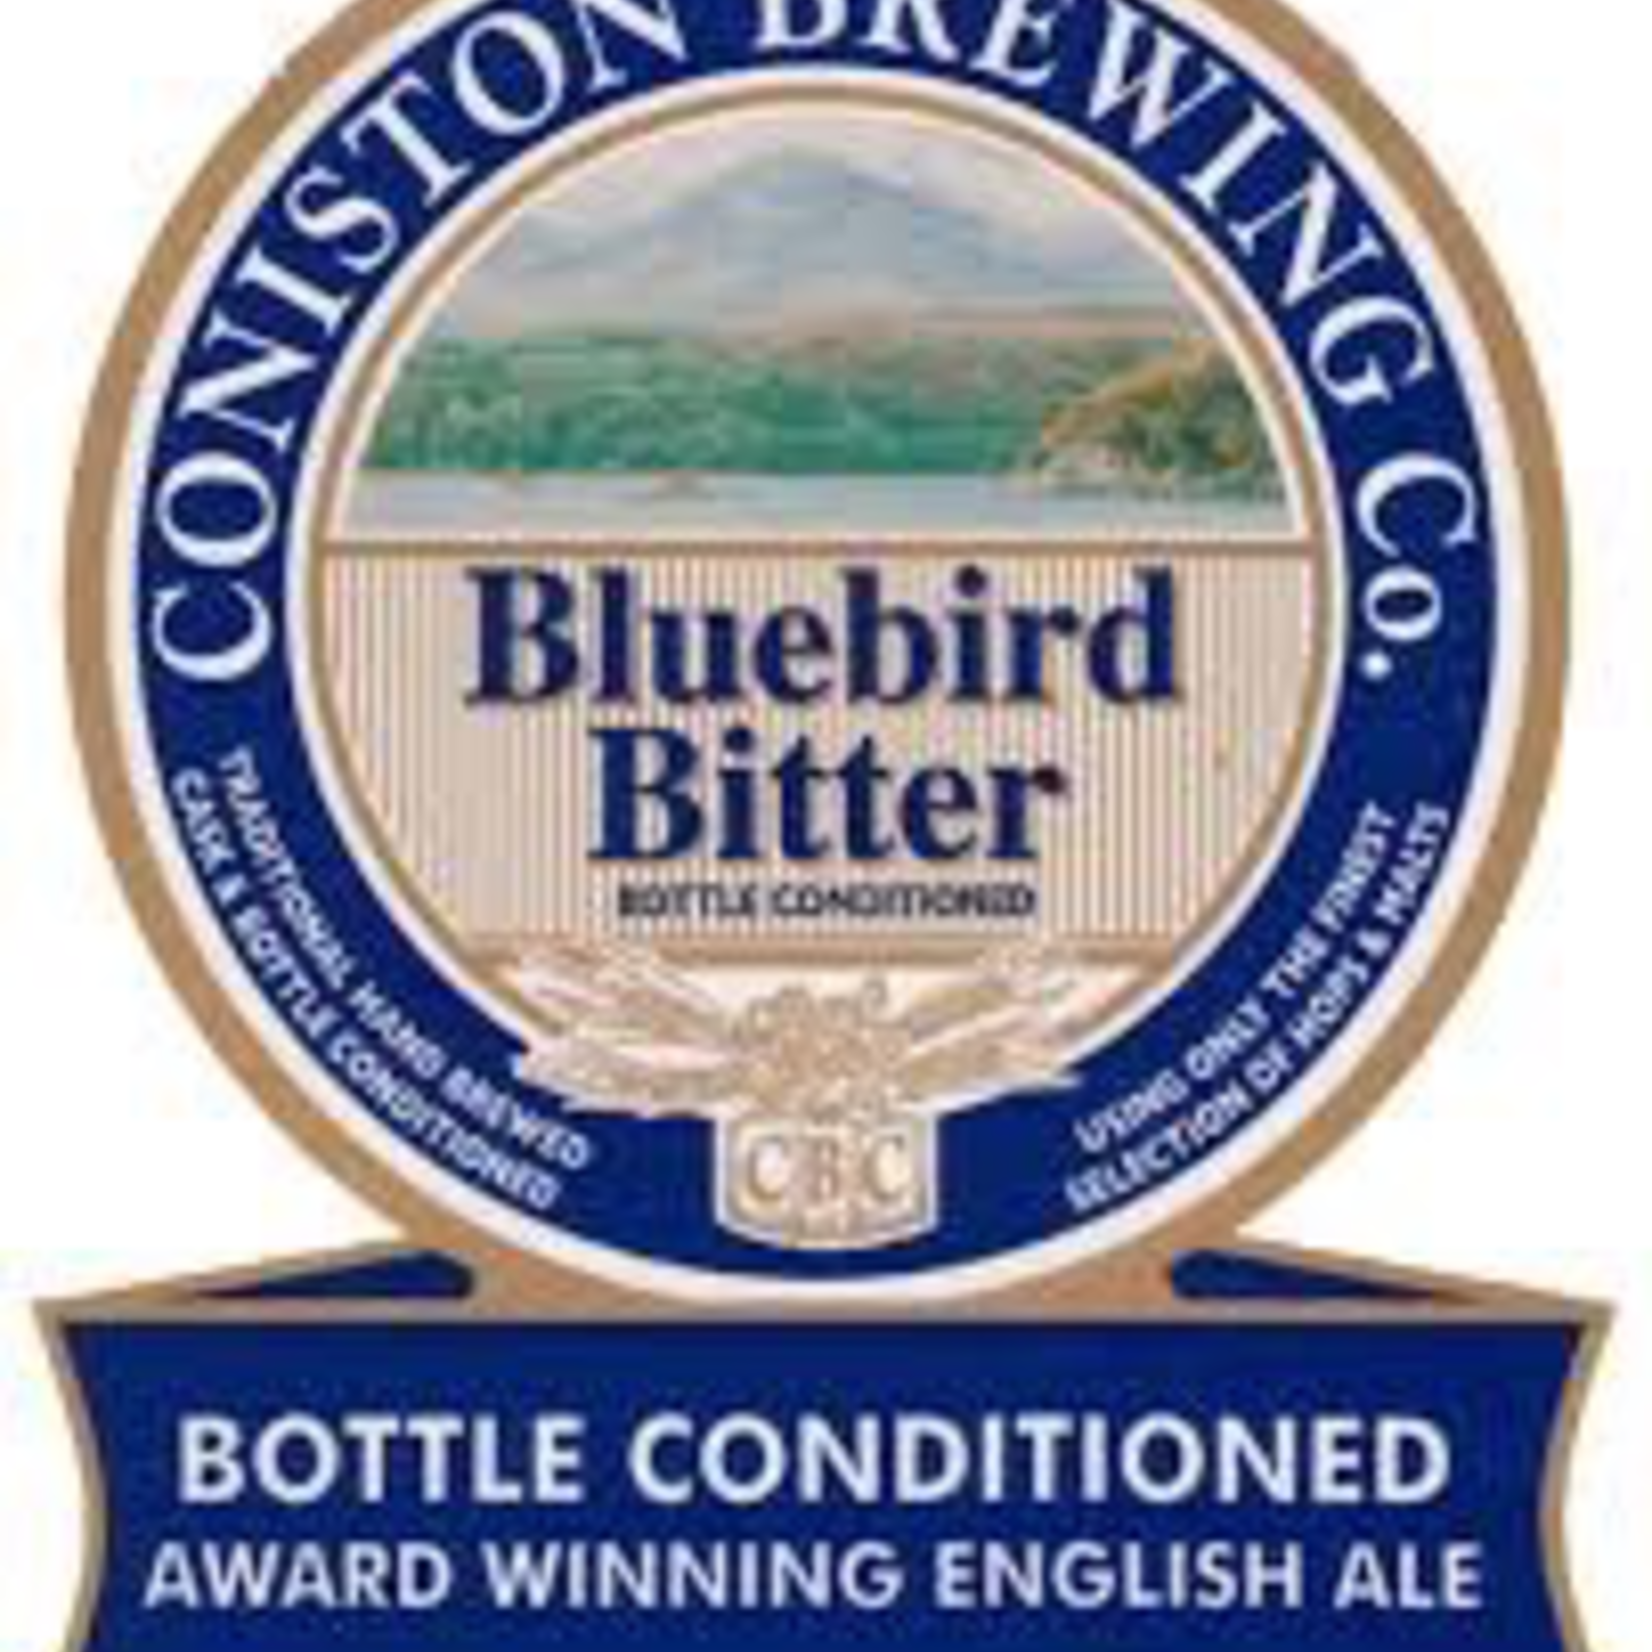 UK Coniston Bluebird Bitter